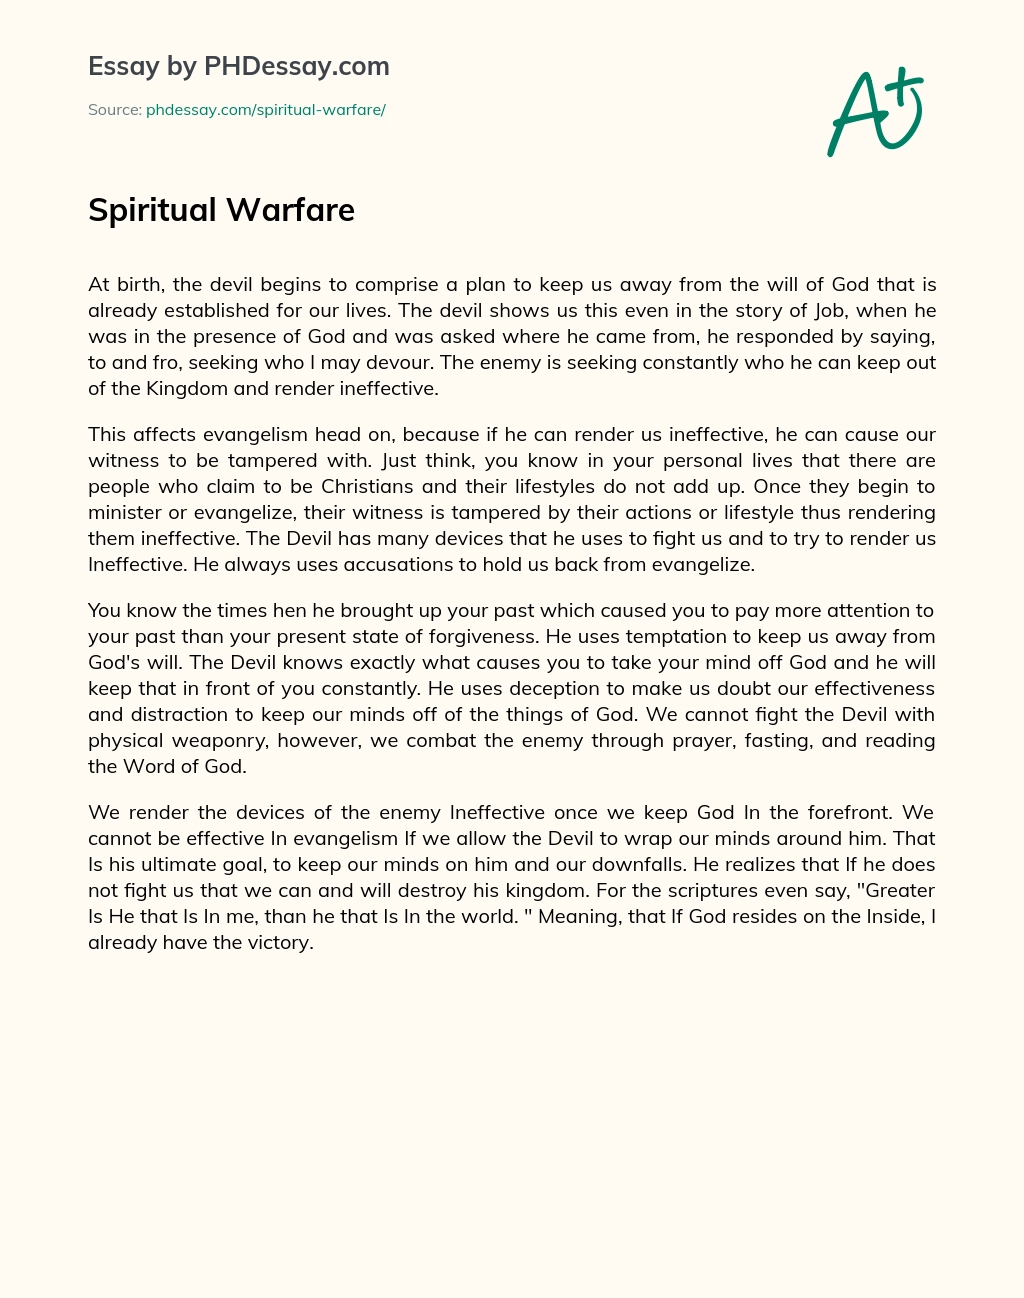 Spiritual Warfare essay